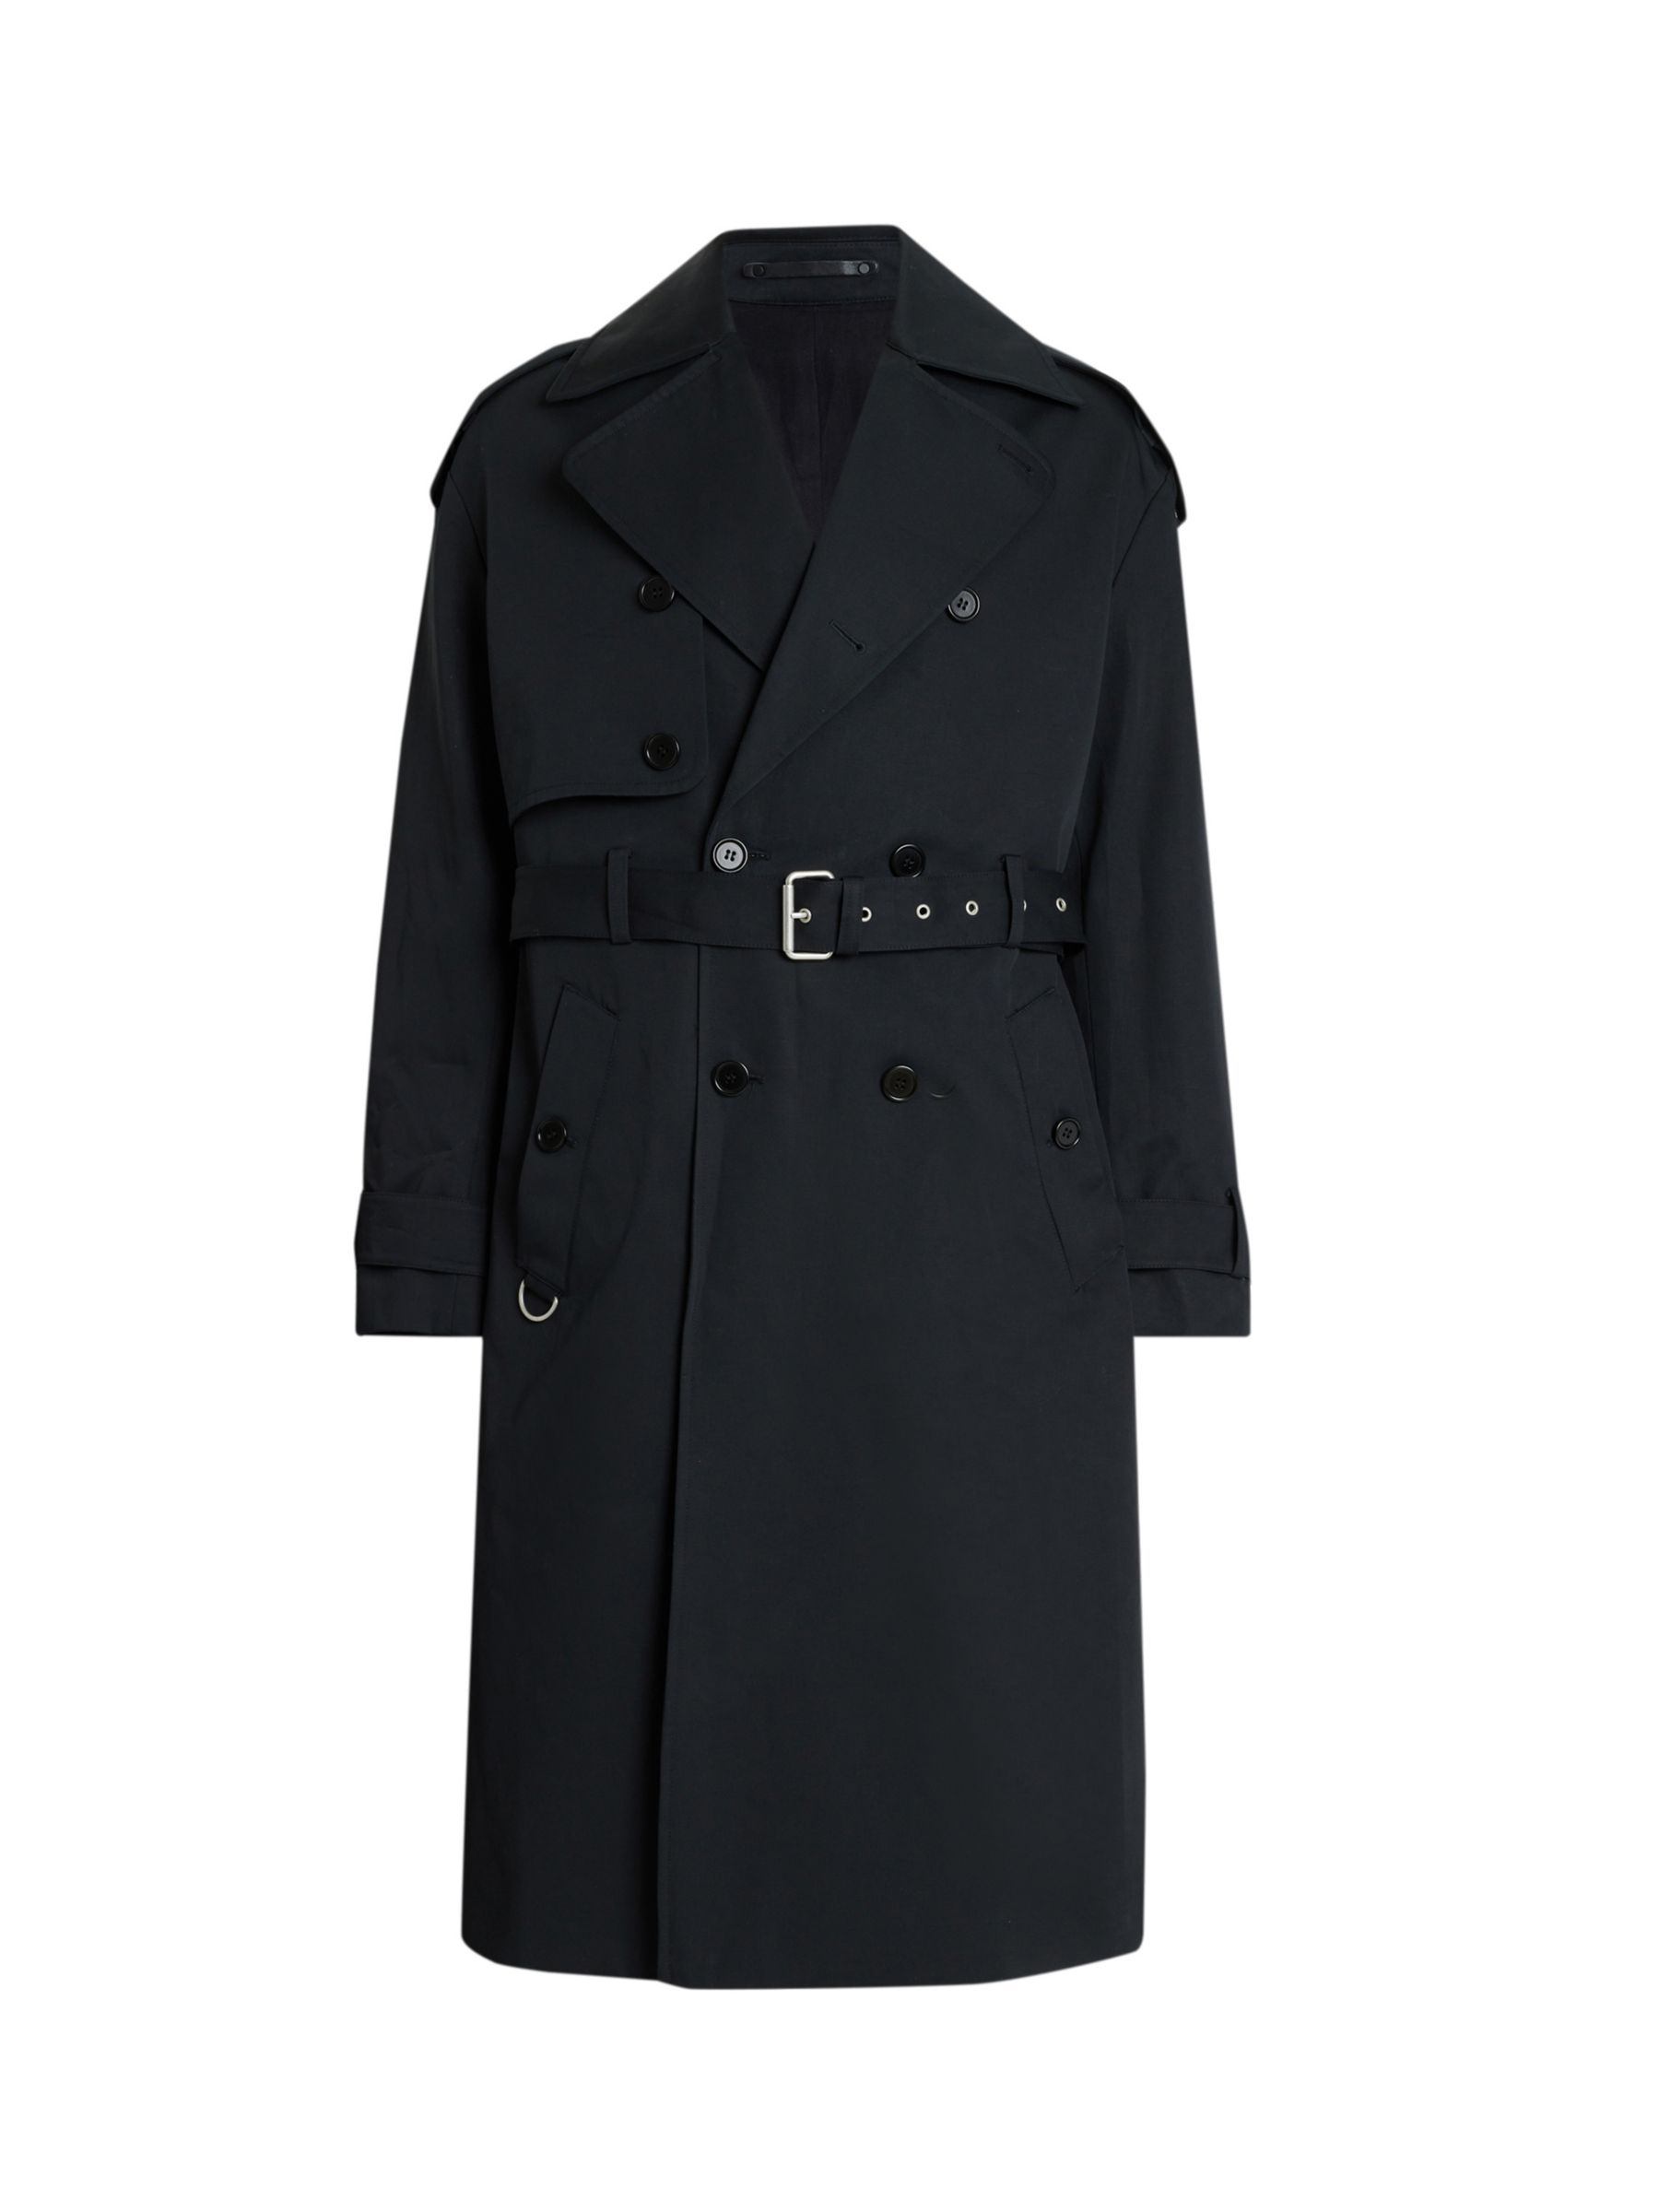 AllSaints Spencer Trench Coat, Black at John Lewis & Partners